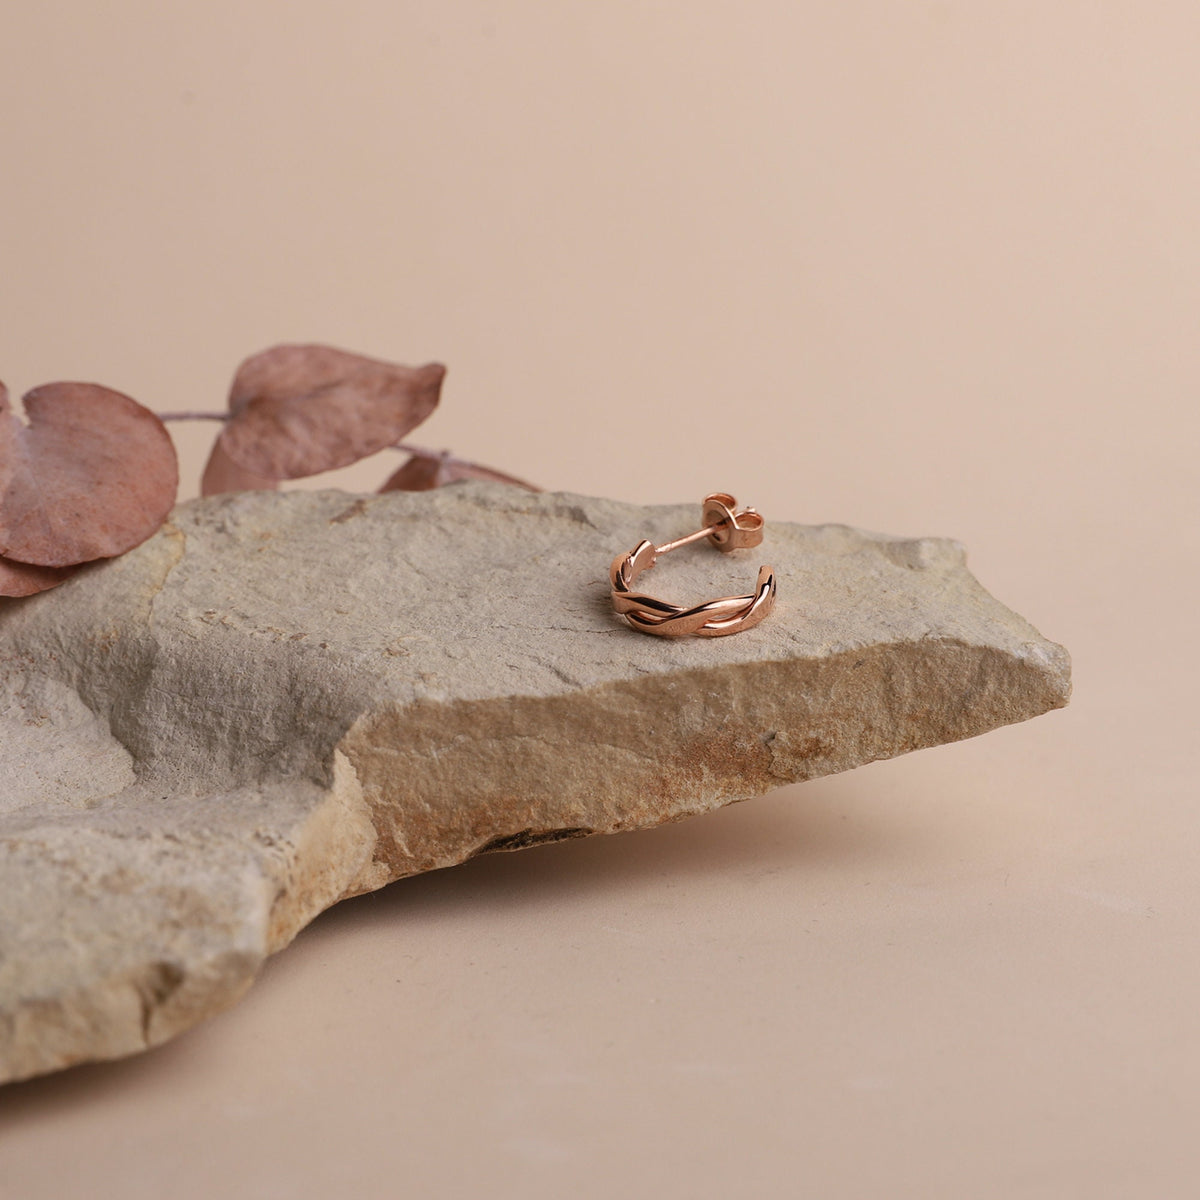 Waterproof Permanent Huggies Hoop Earrings, Infinity Minimalist Jewelry, Dainty Second Hole Earrings • Silver, Gold and Rose Gifts